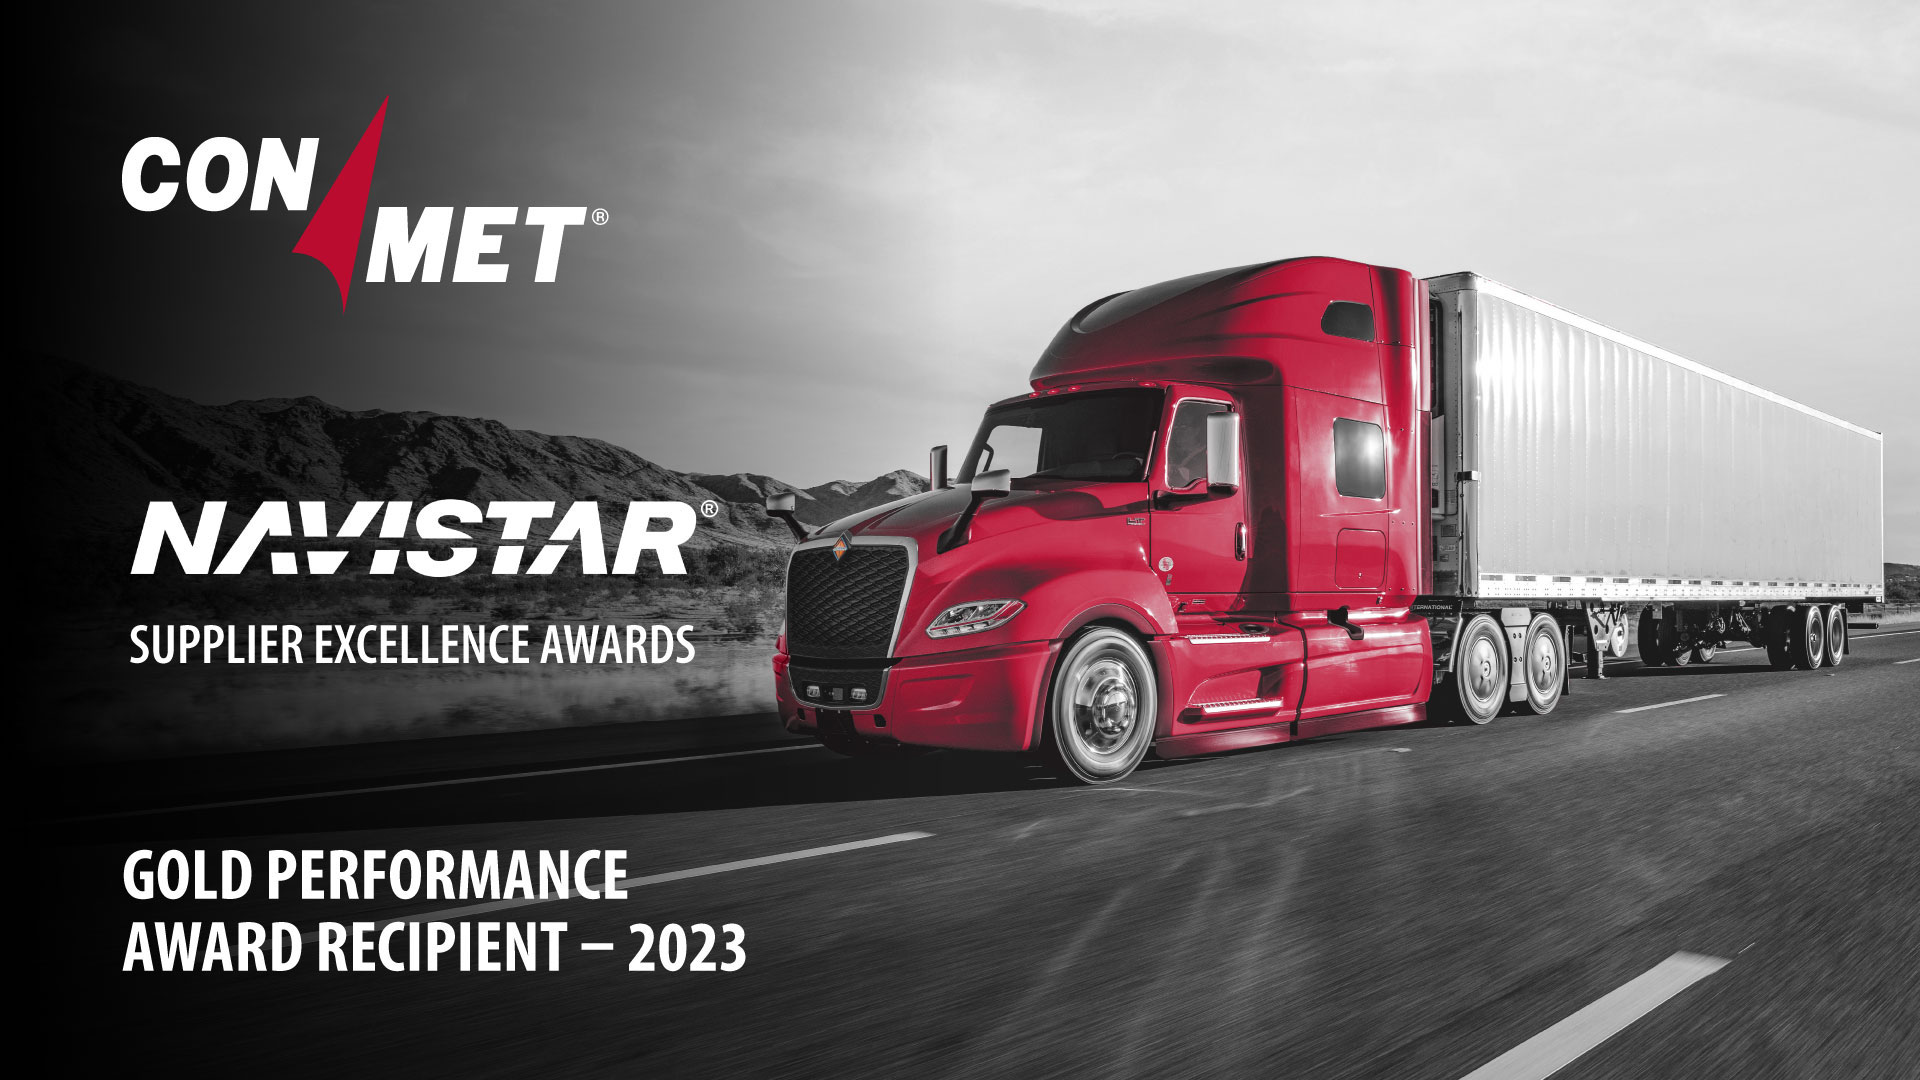 ConMet reçoit le prix Supplier Excellence Awards 2023 de Navistar